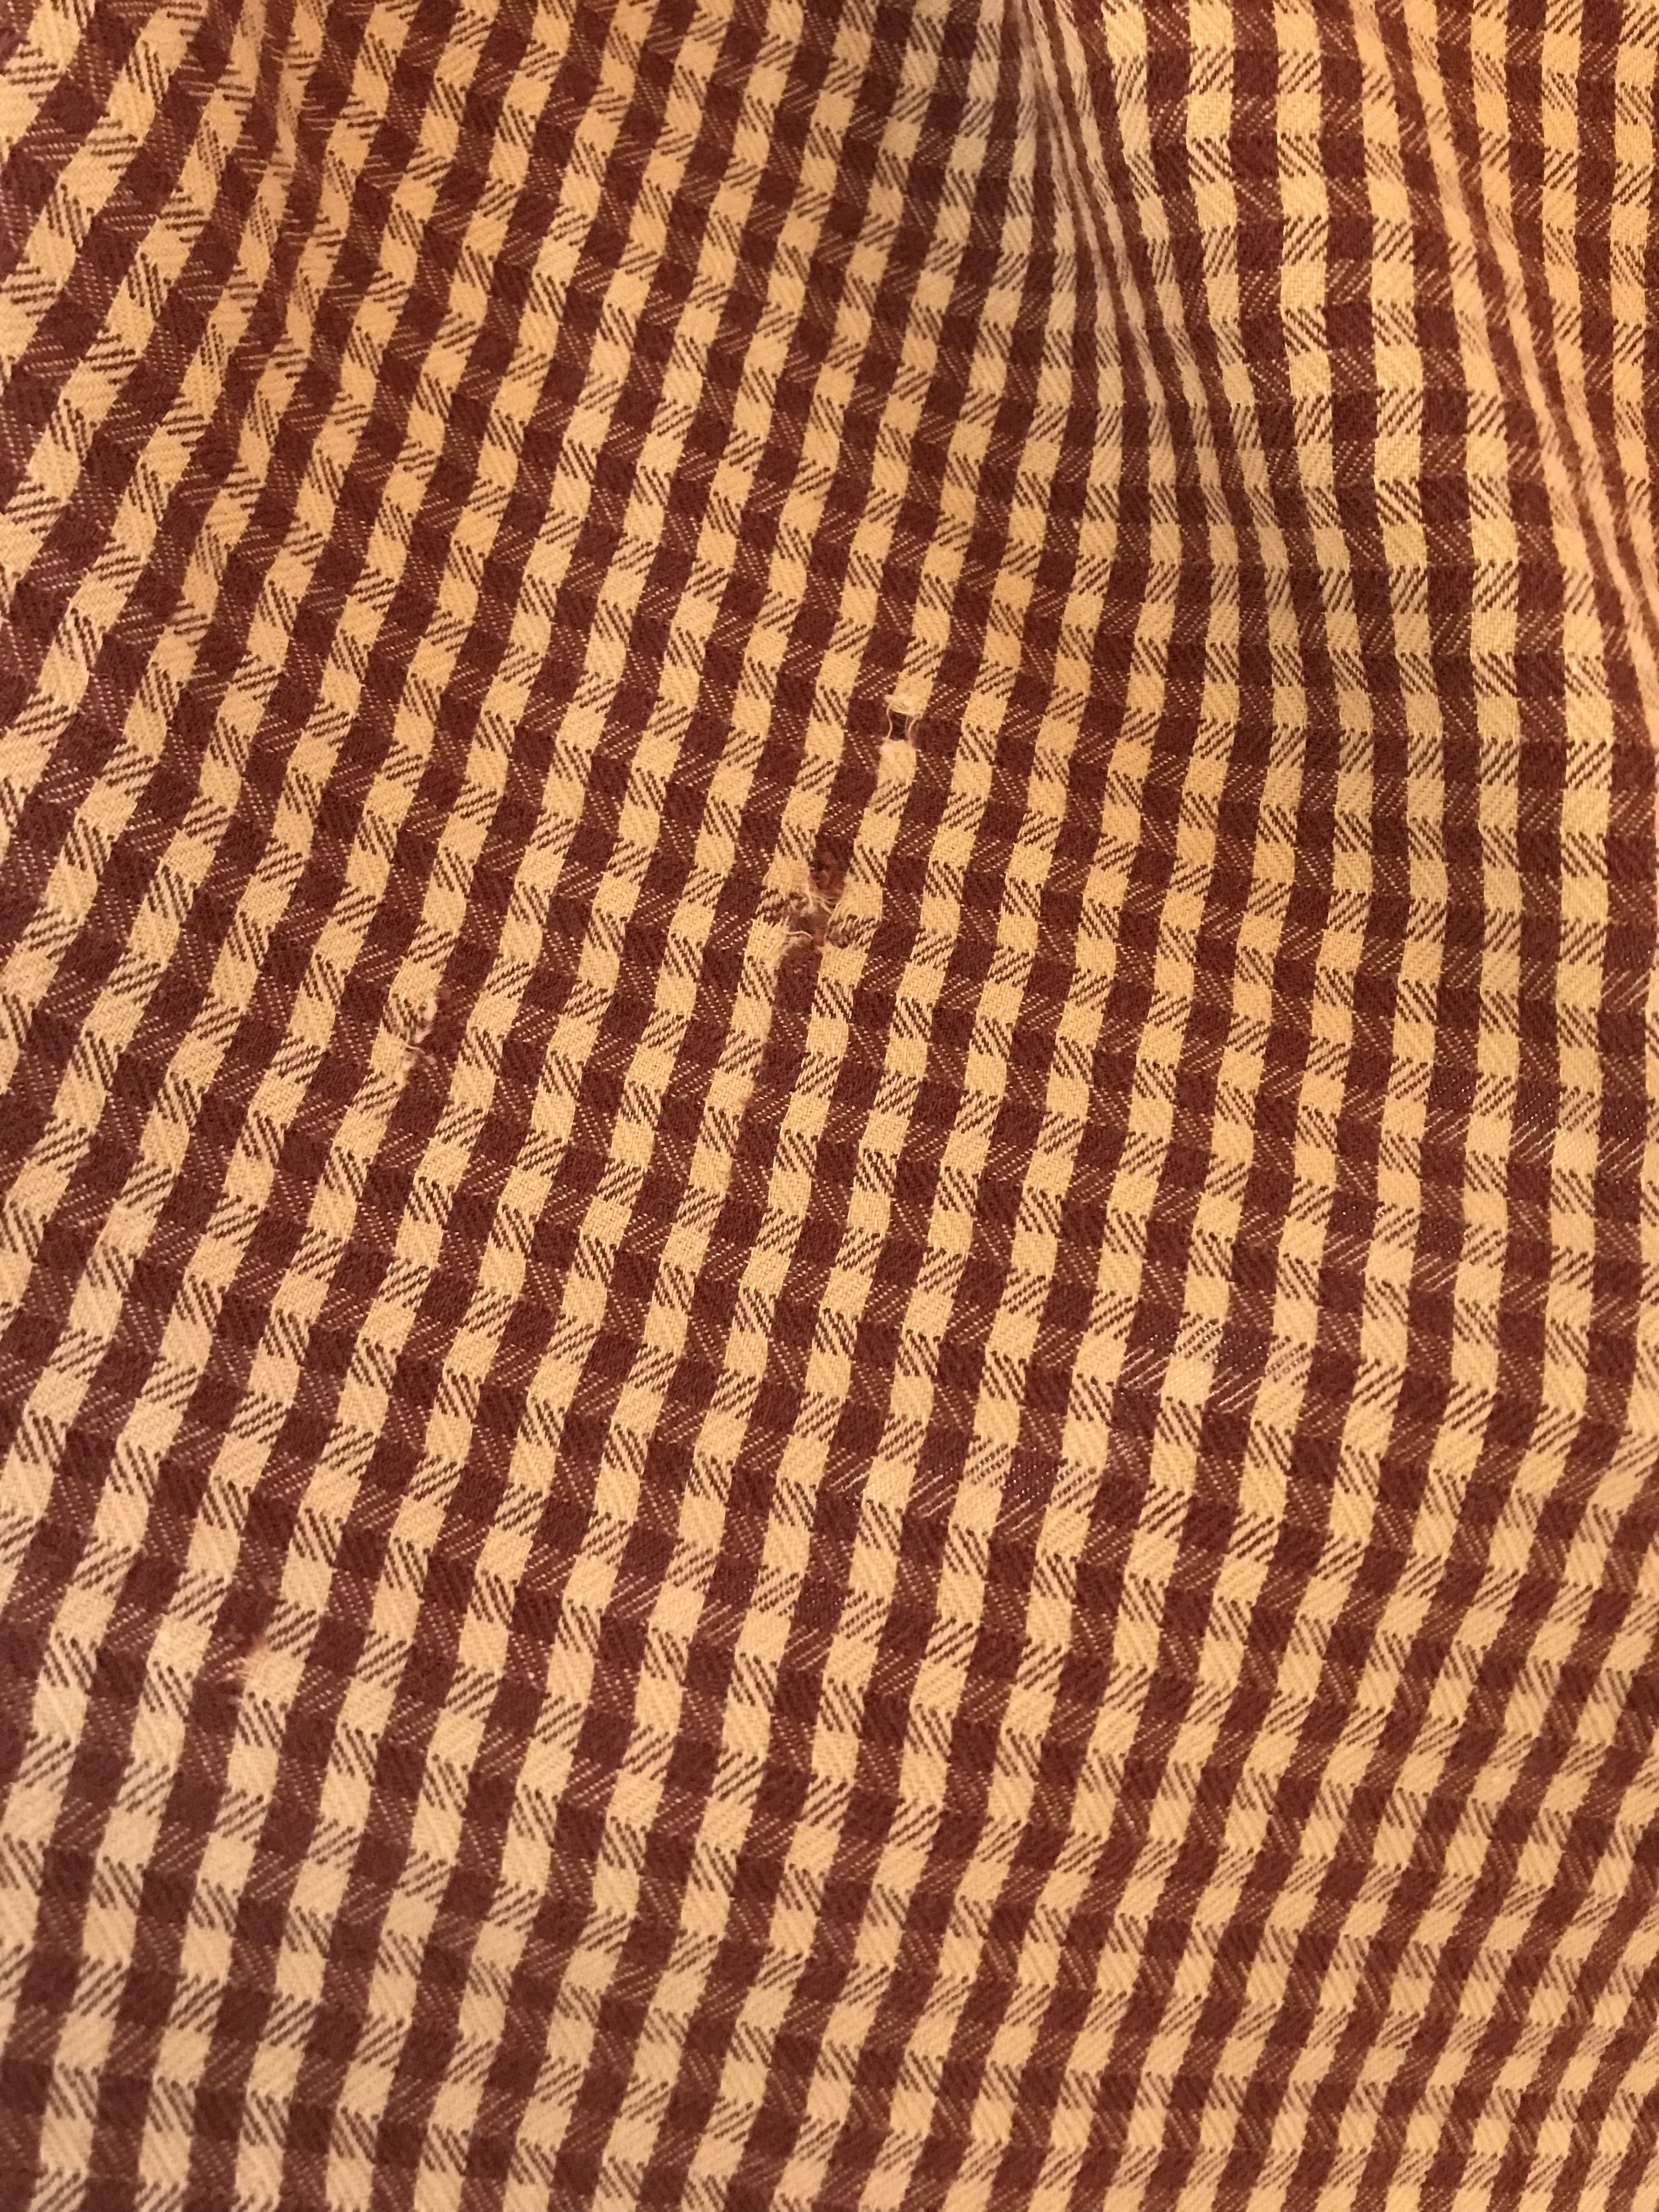 Louis Estere ギンガムチェックシャツ 赤茶×ベージュ Mサイズ